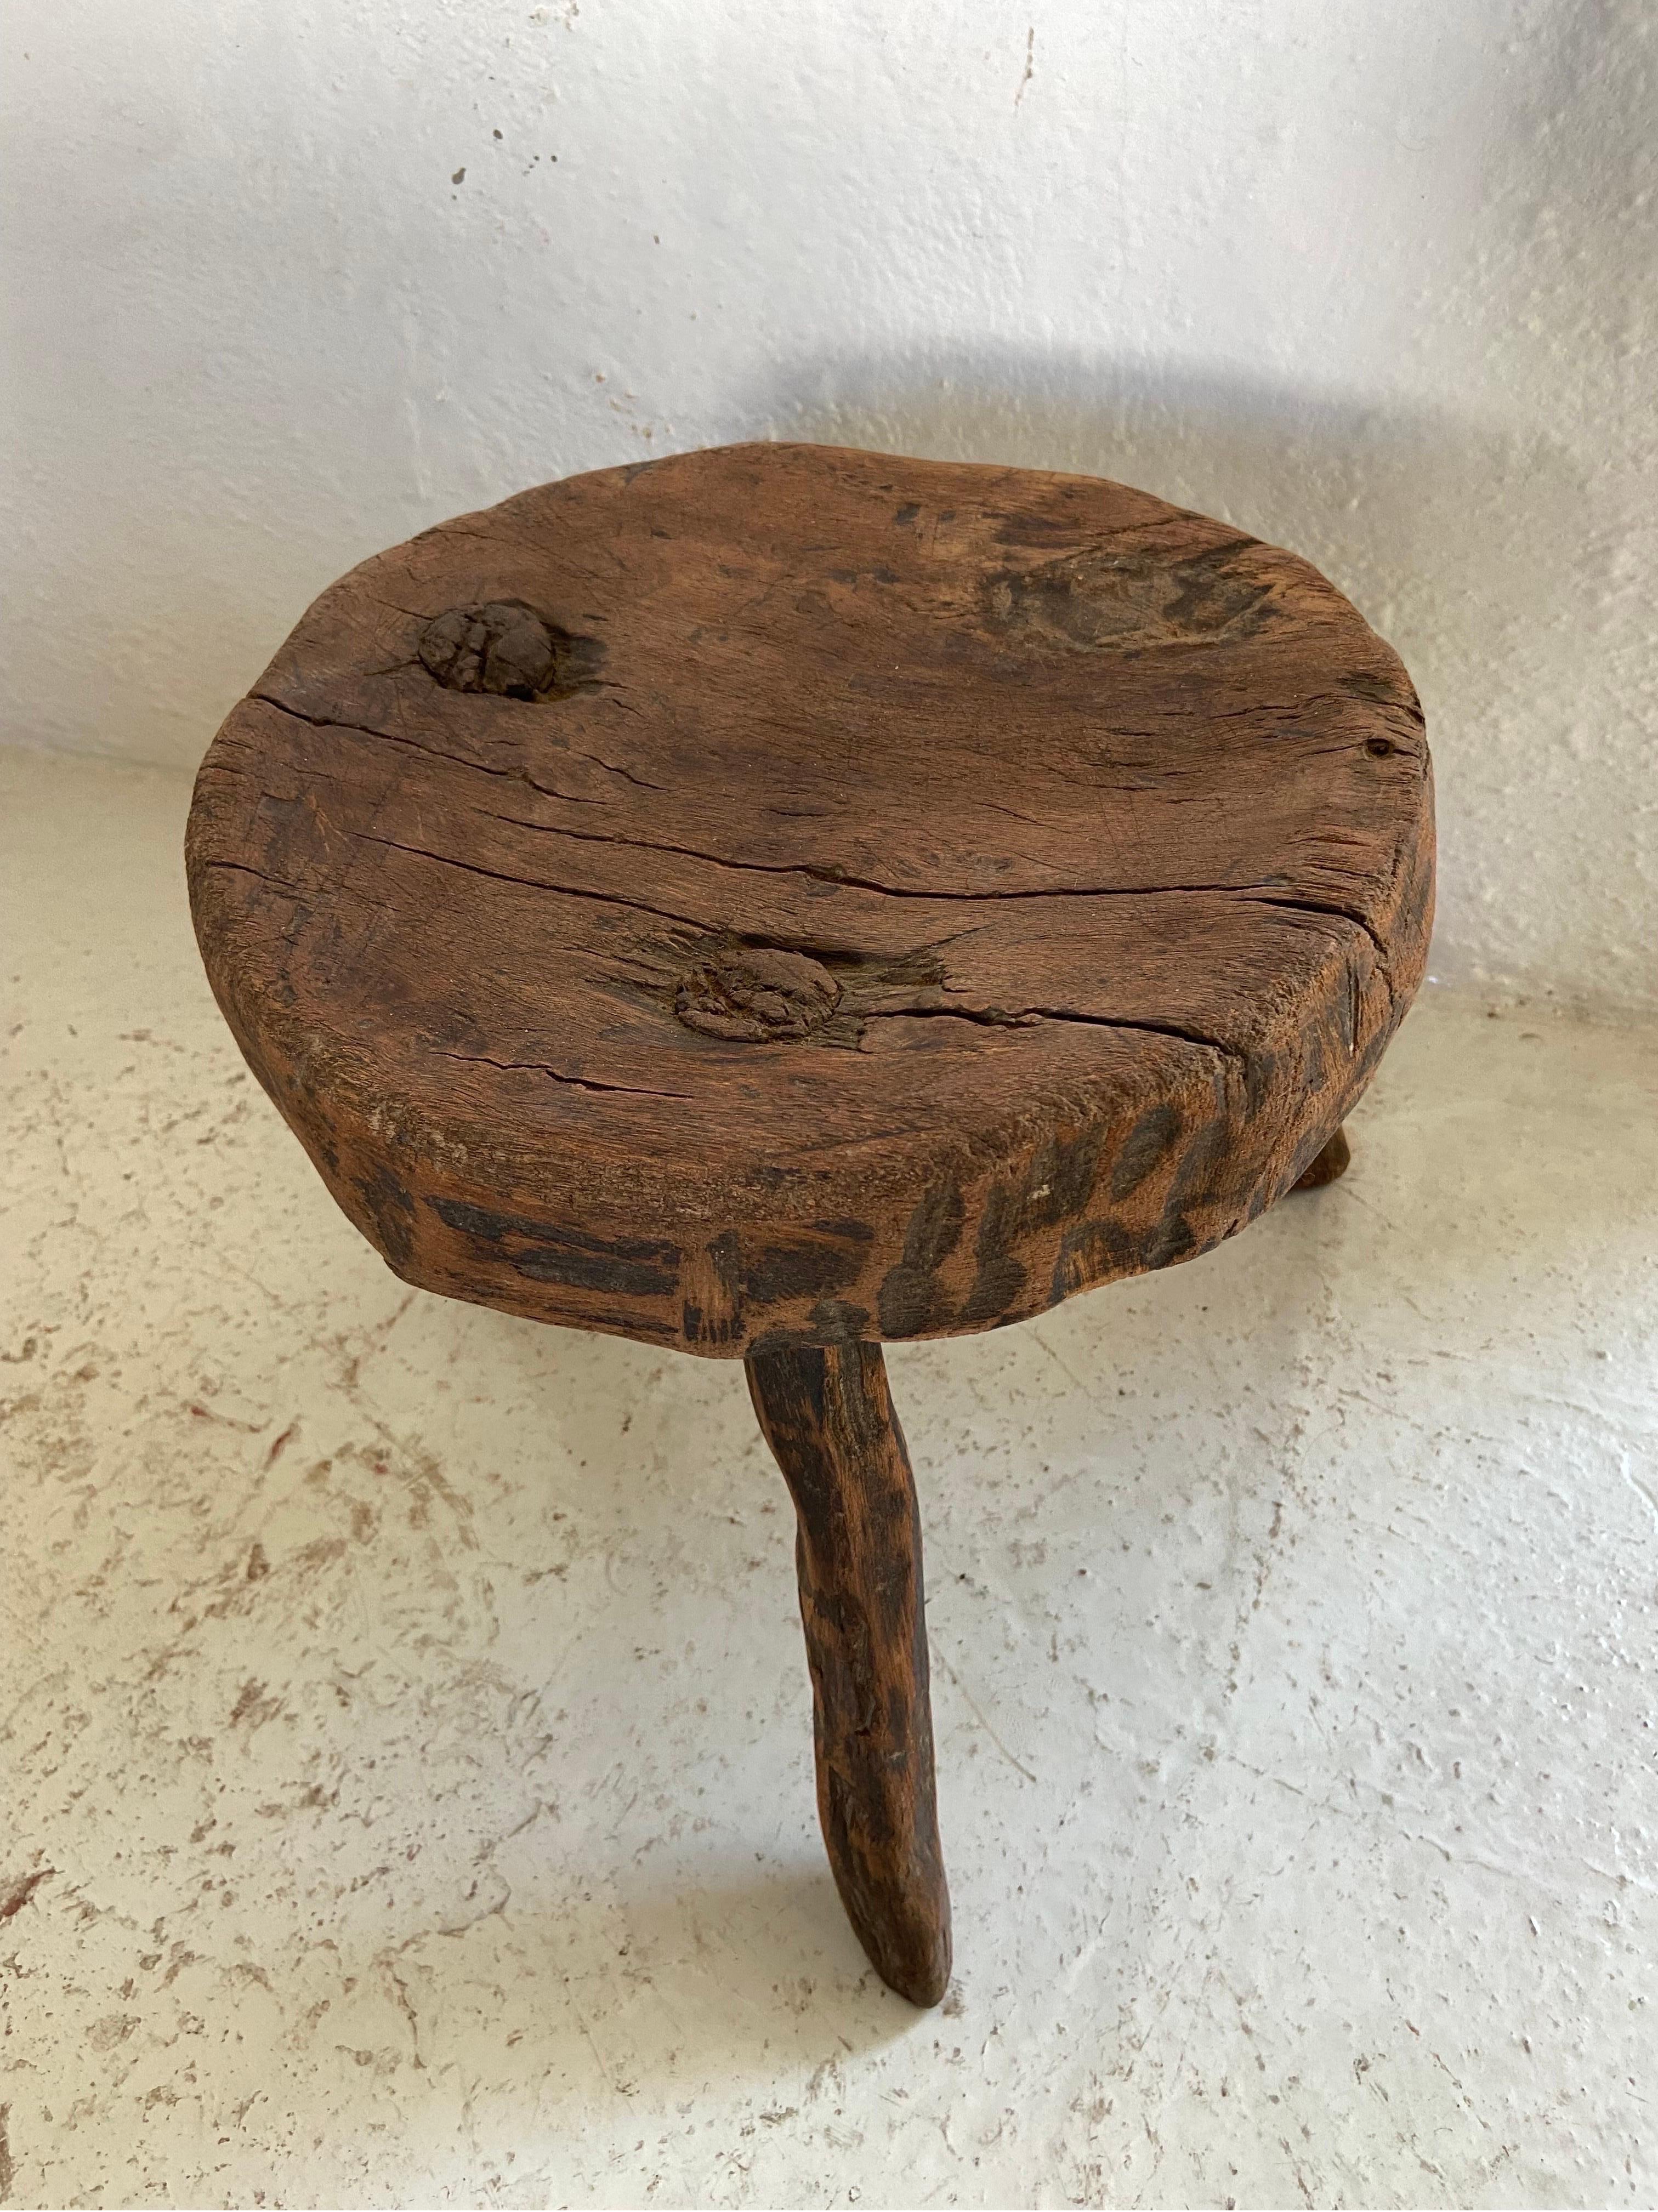 Mid 20th century hardwood stool from Guanajuato, Mexico.